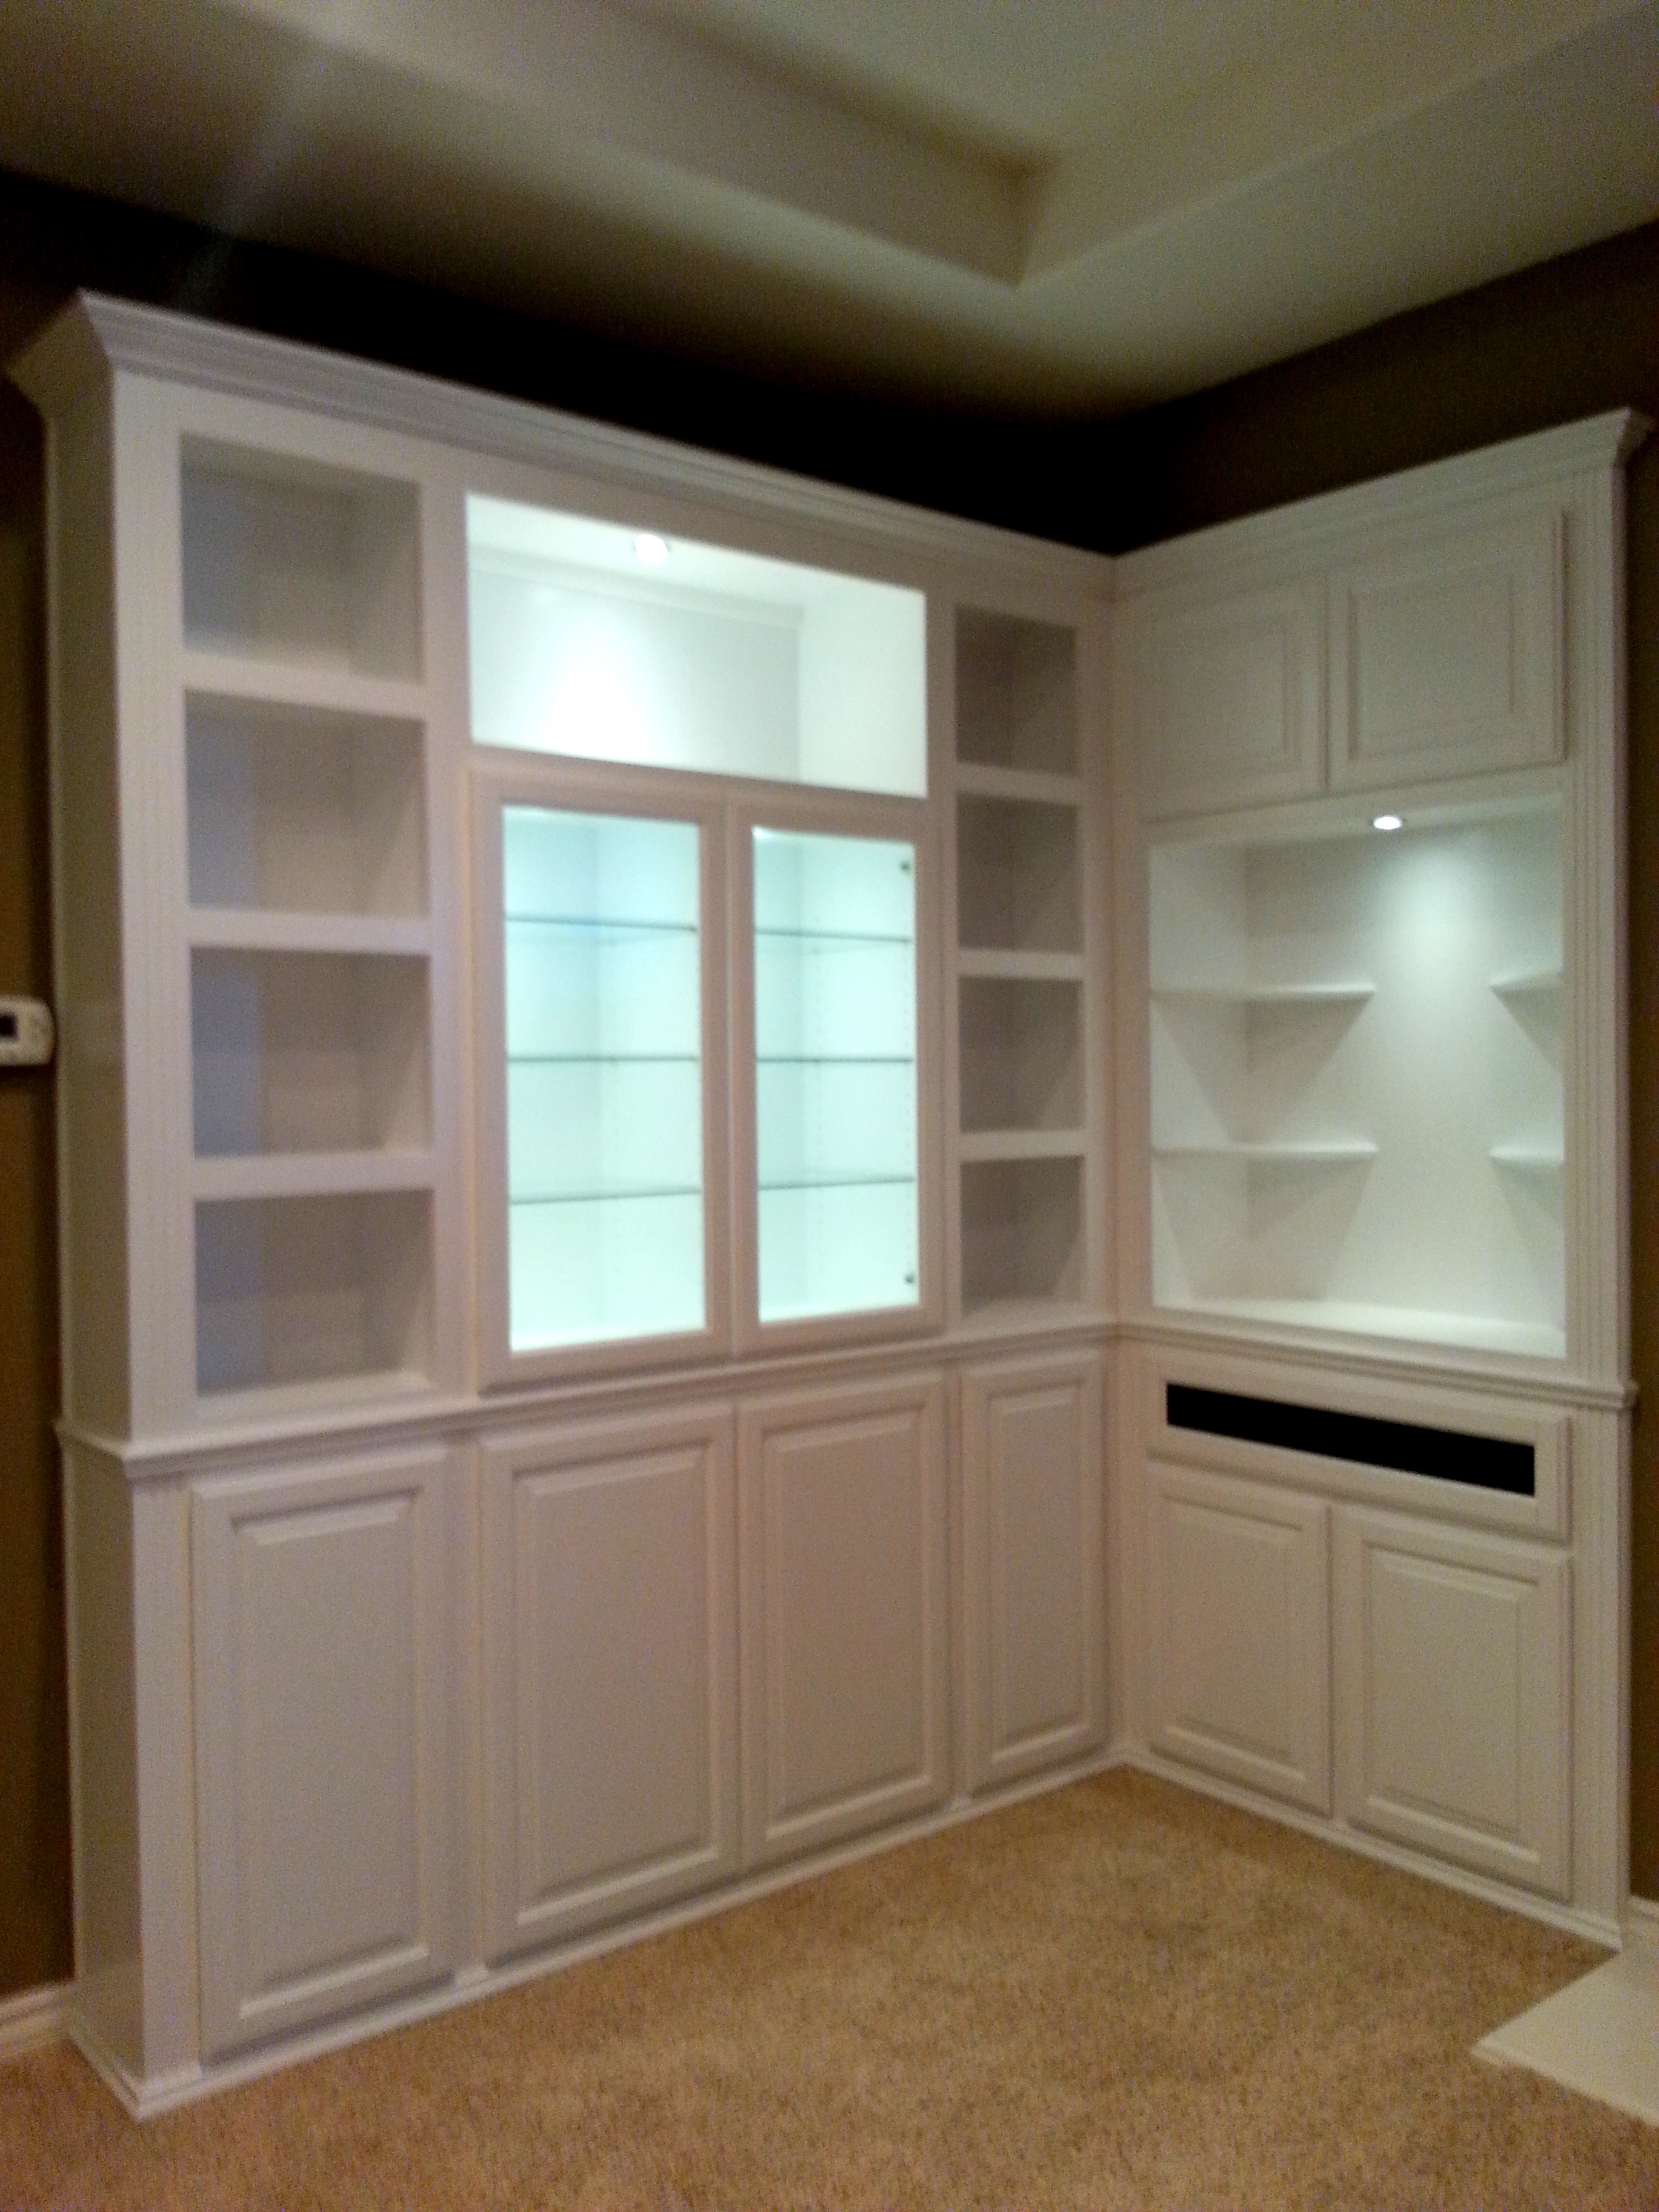 Built in white corner cabinets